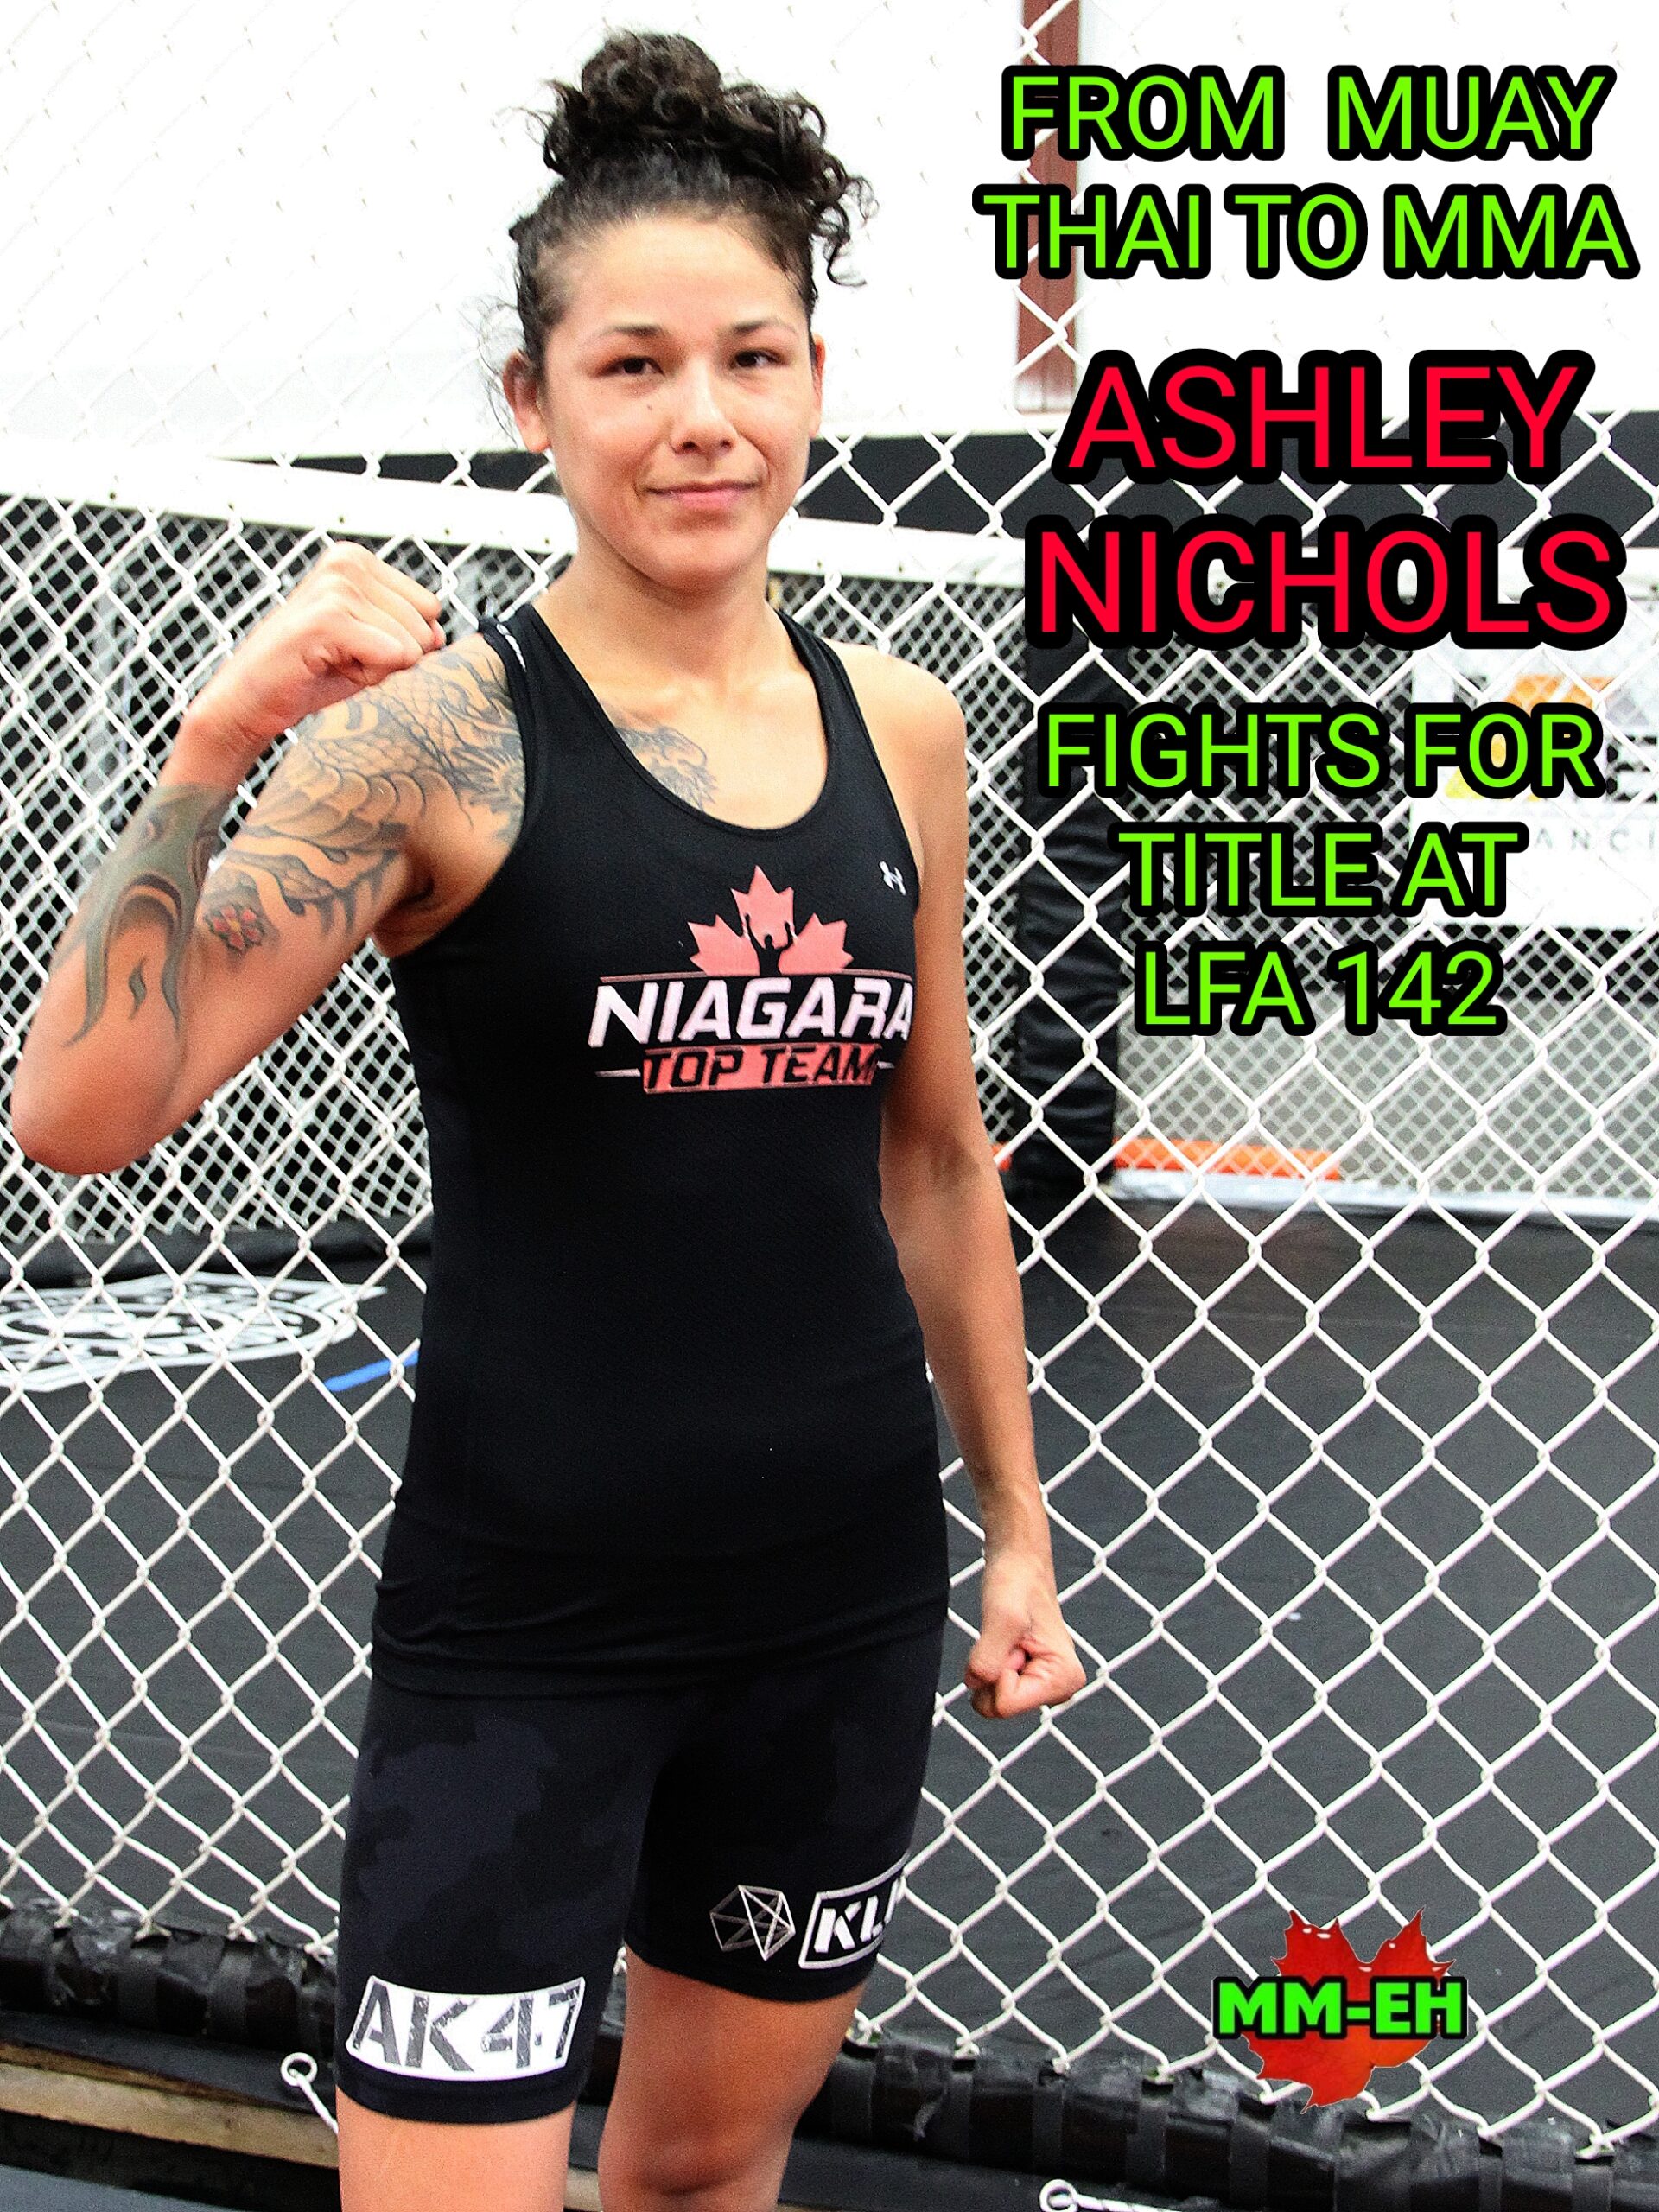 Muay Thai Champion Ashley Nichols Seeks To Add MMA Title At LFA 142